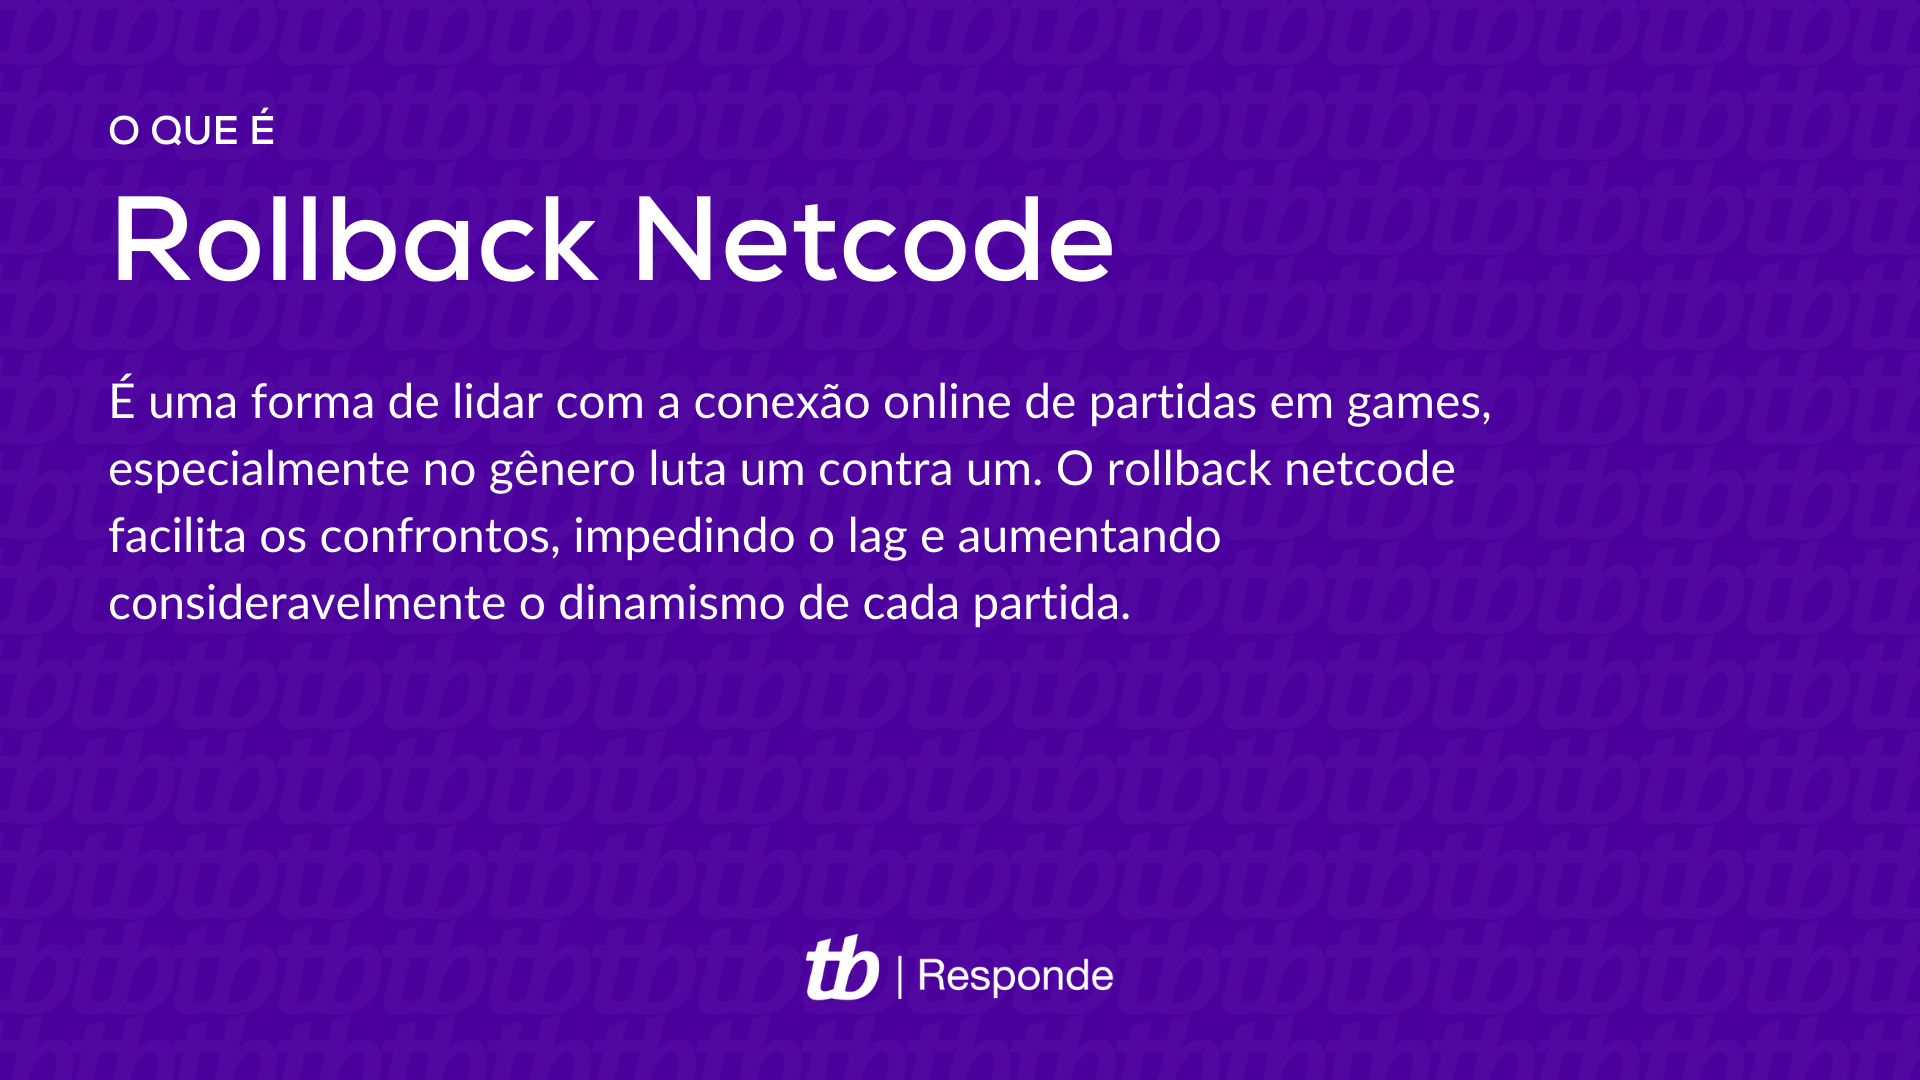 O que é rollback netcode? - Canal do Xbox